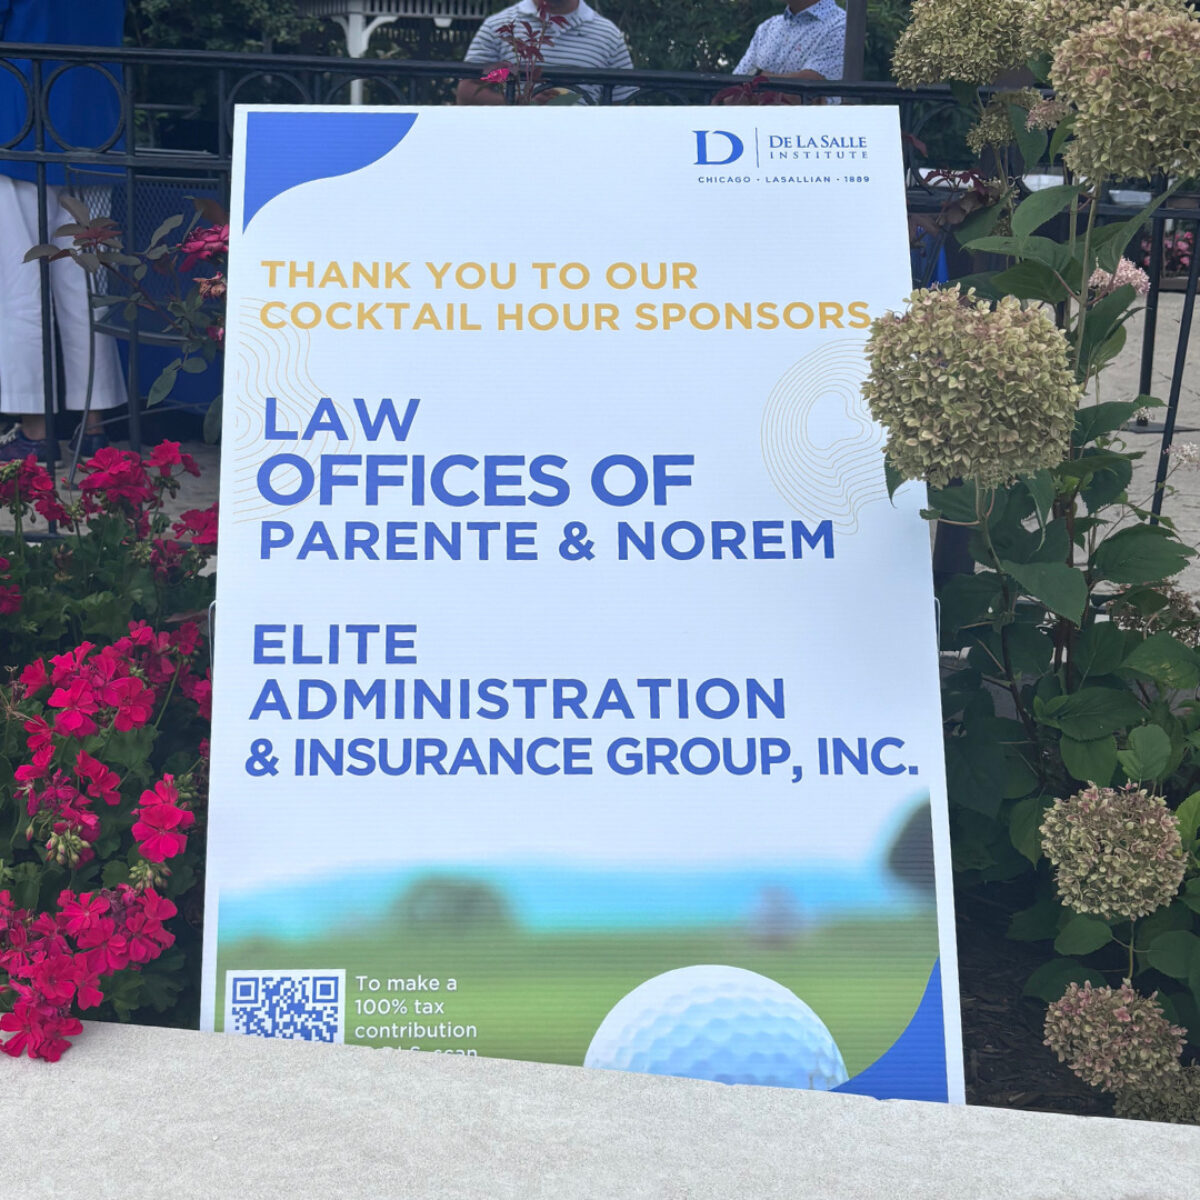 P&N BLOG | The Law Offices of Parente & Norem Sponsor Annual De La Salle Institute Golf Outing